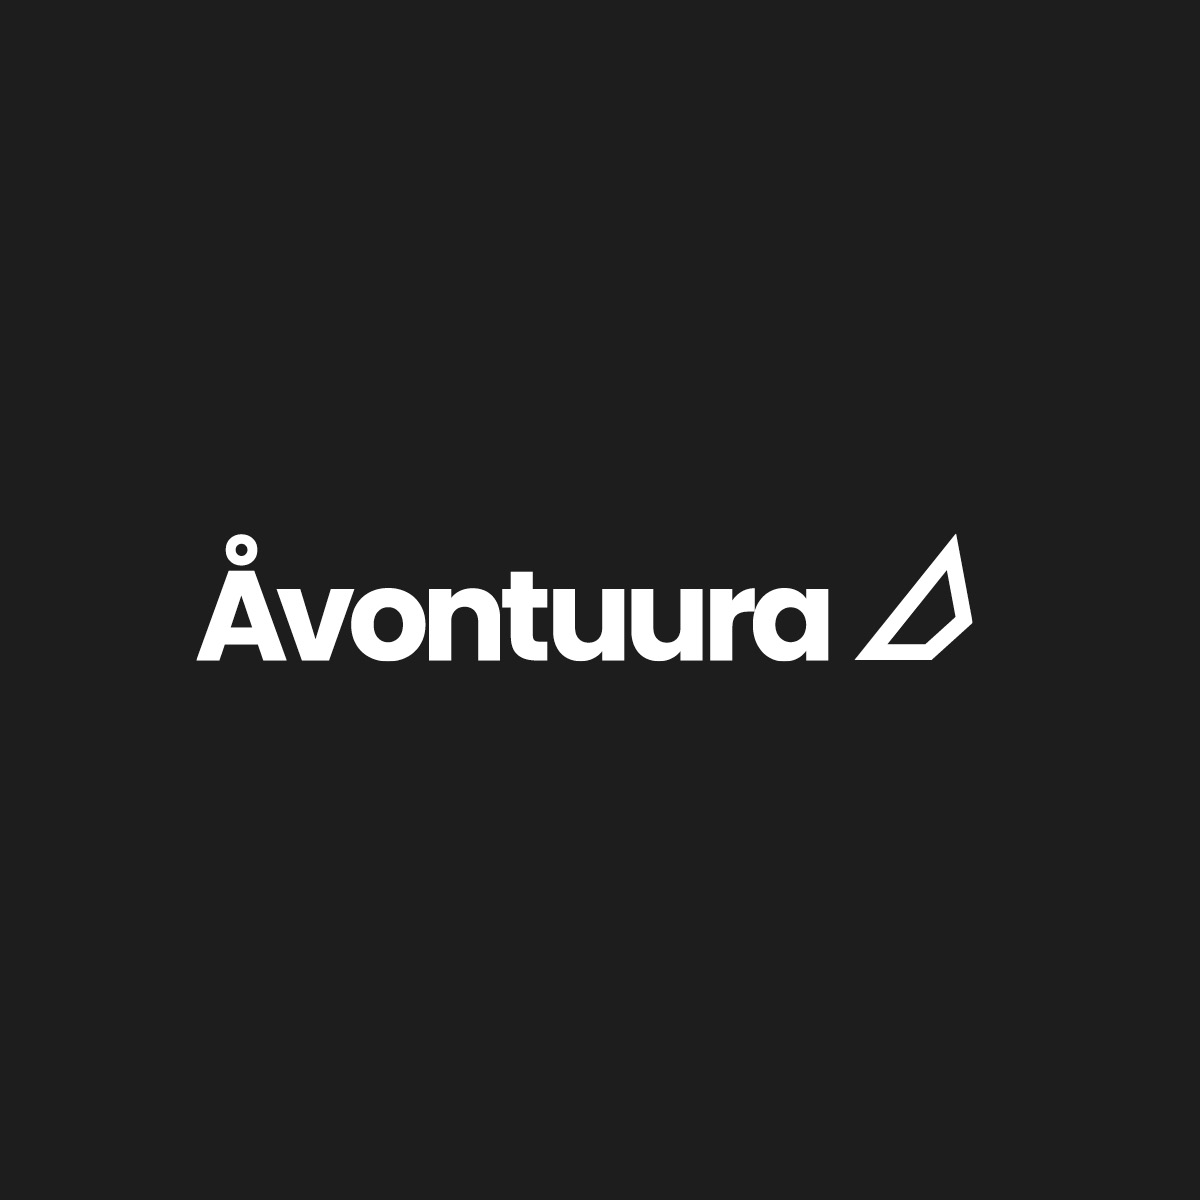 Avonturra-canadian-travel-blog-brand-design-universe